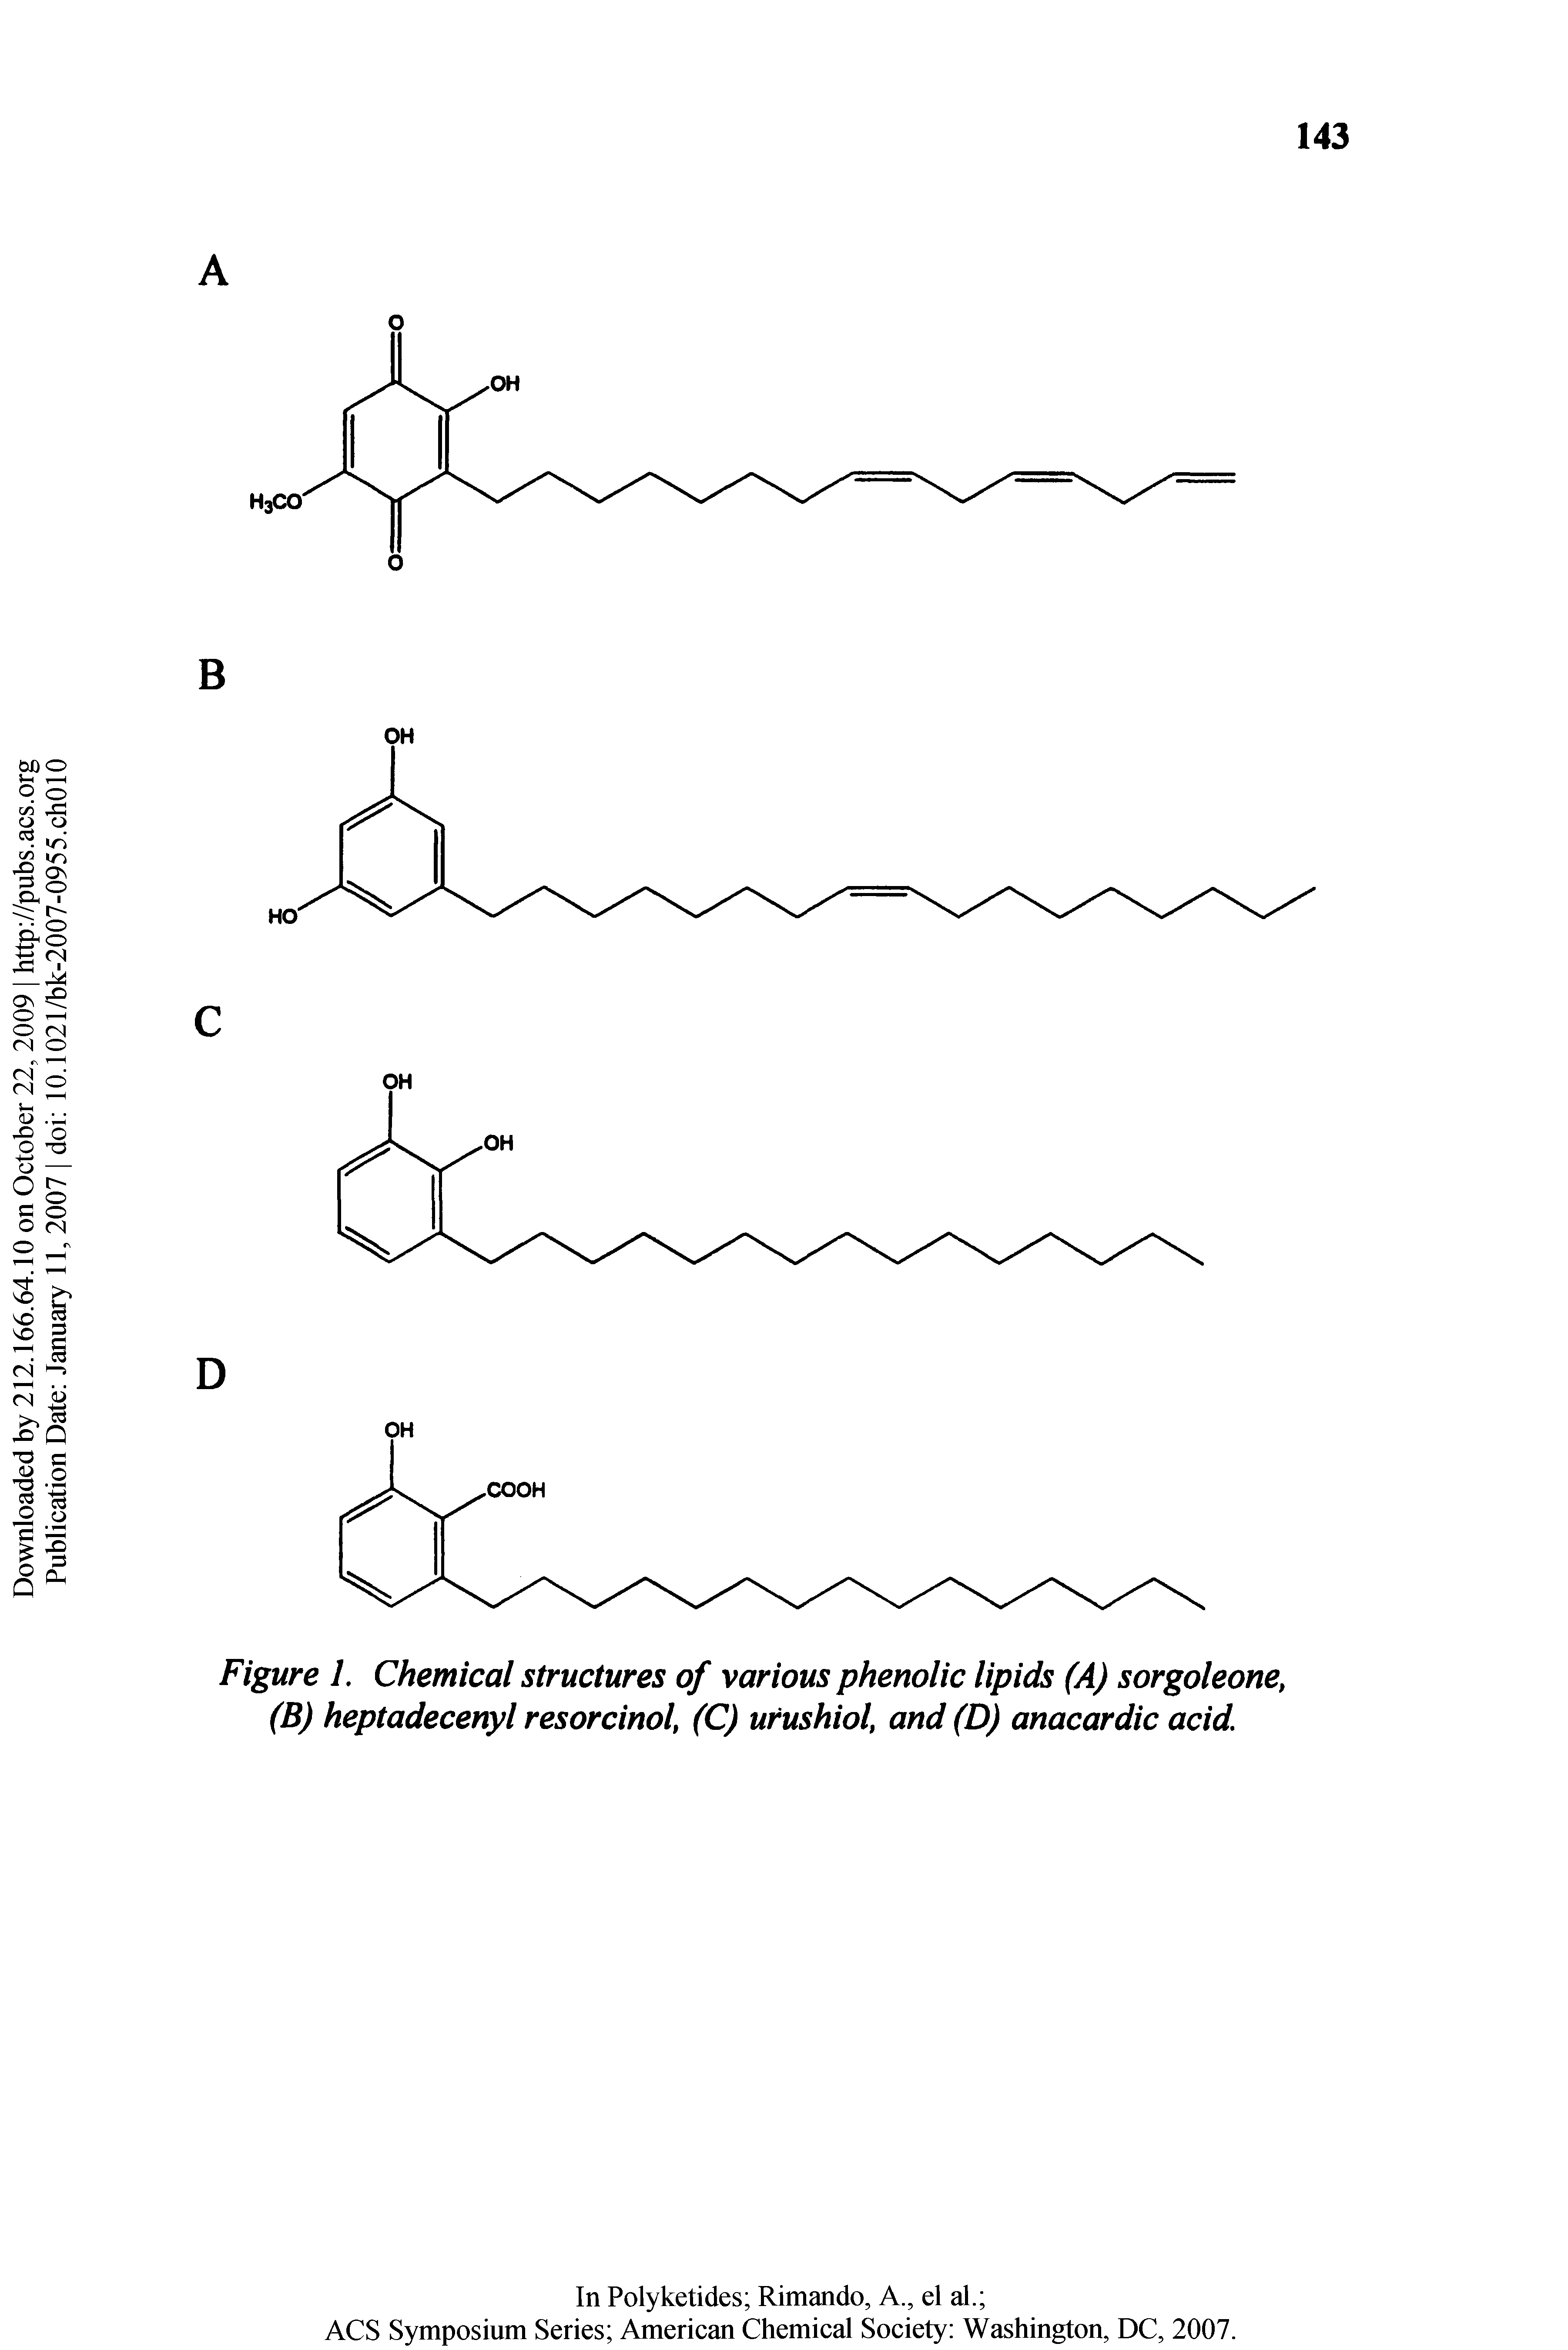 Figure I. Chemical structures of various phenolic lipids (A) sorgoleone, (B) heptadecenyl resorcinol (C) urushiol and (D) anacardic acid.